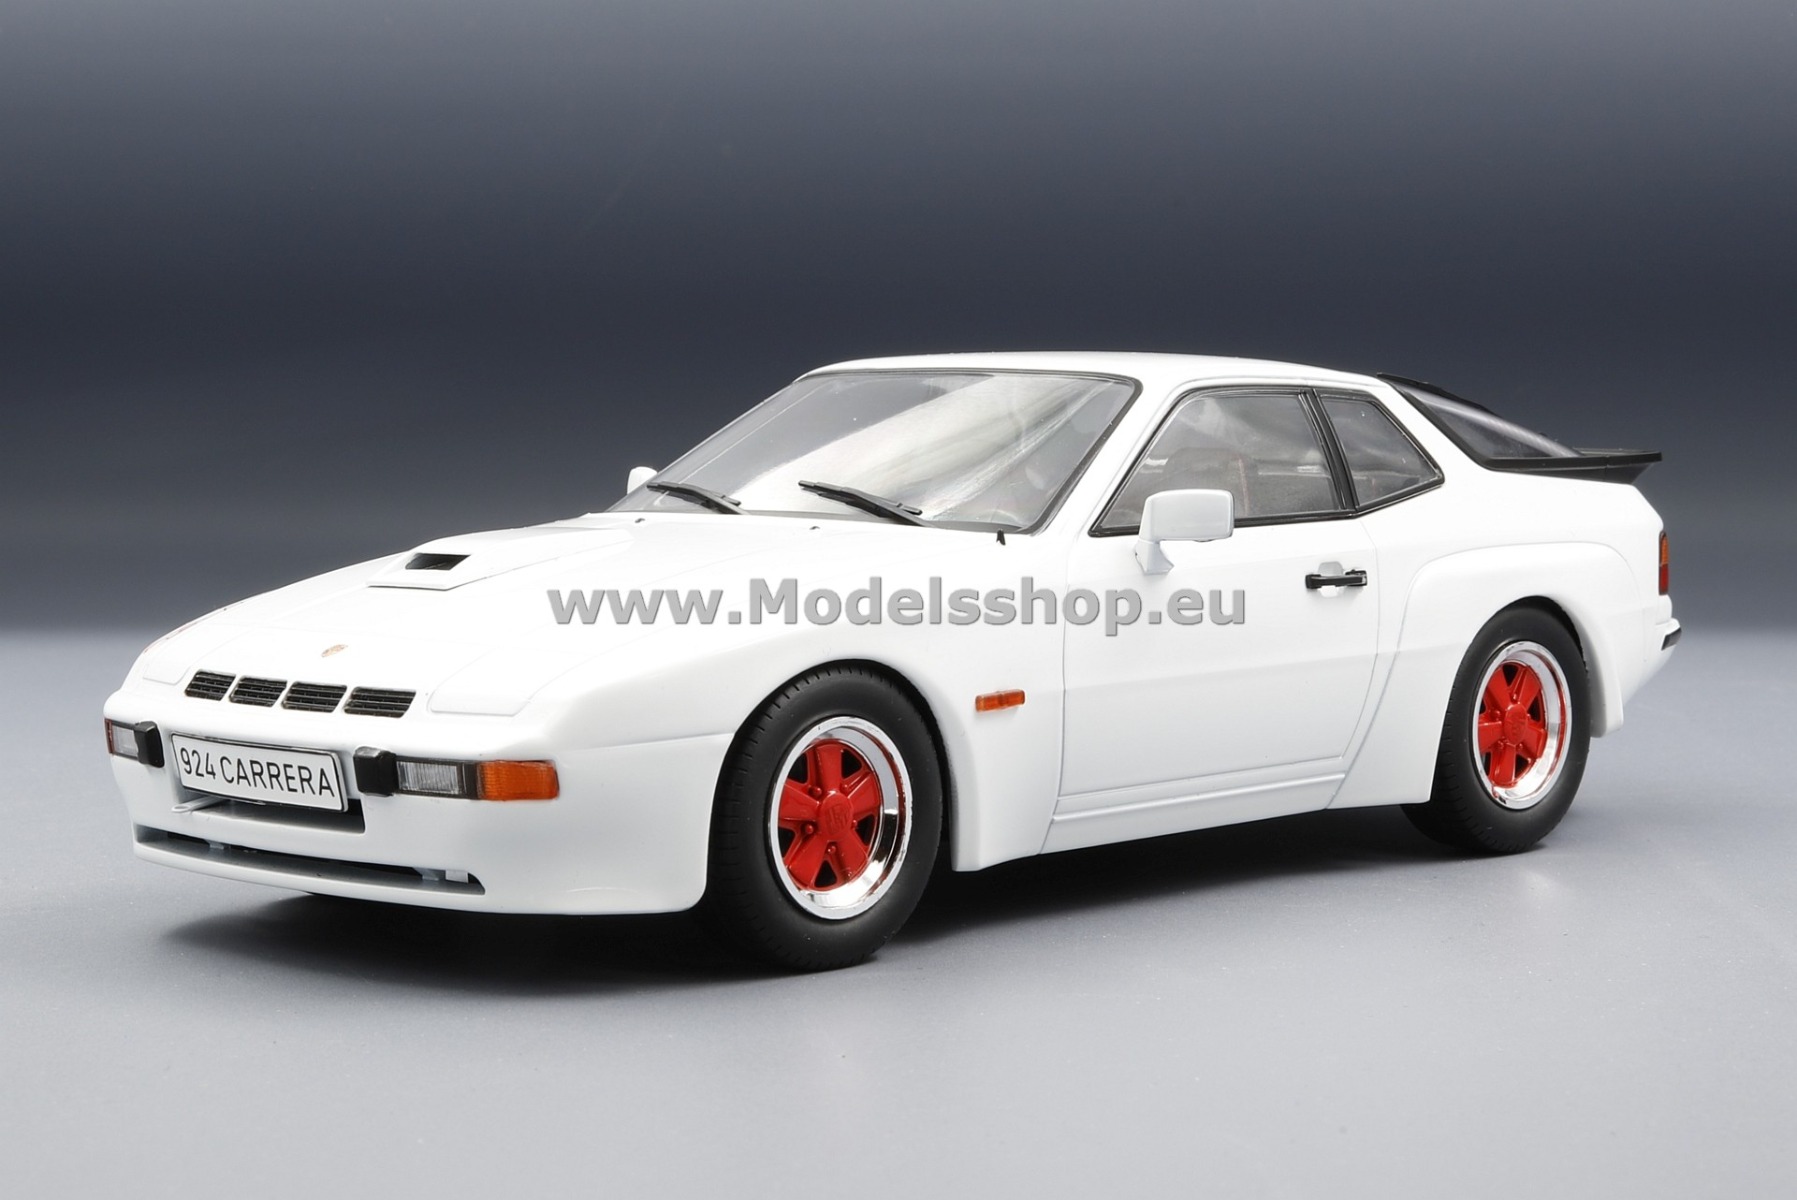 MCG 18303 Porsche 924 Carrera GT, 1981 /white with red wheel rims/